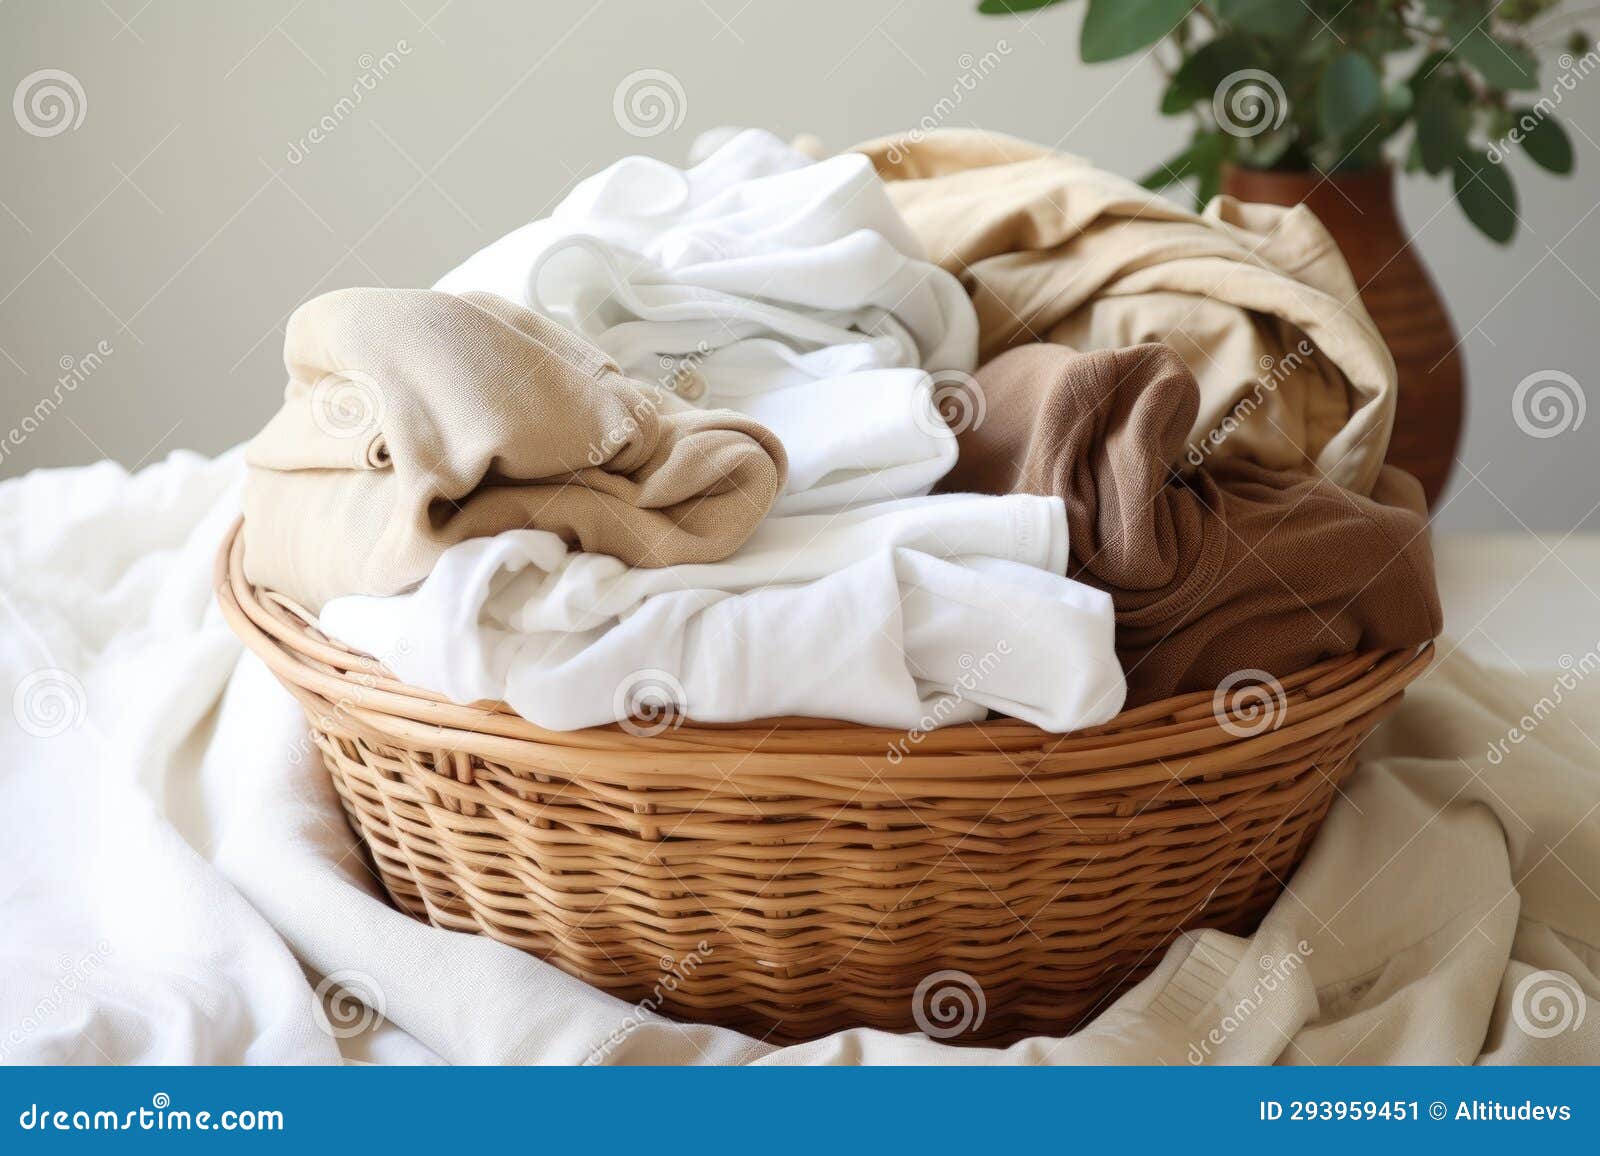 Organic Cotton Clothing Fresh from Laundry Stock Illustration ...